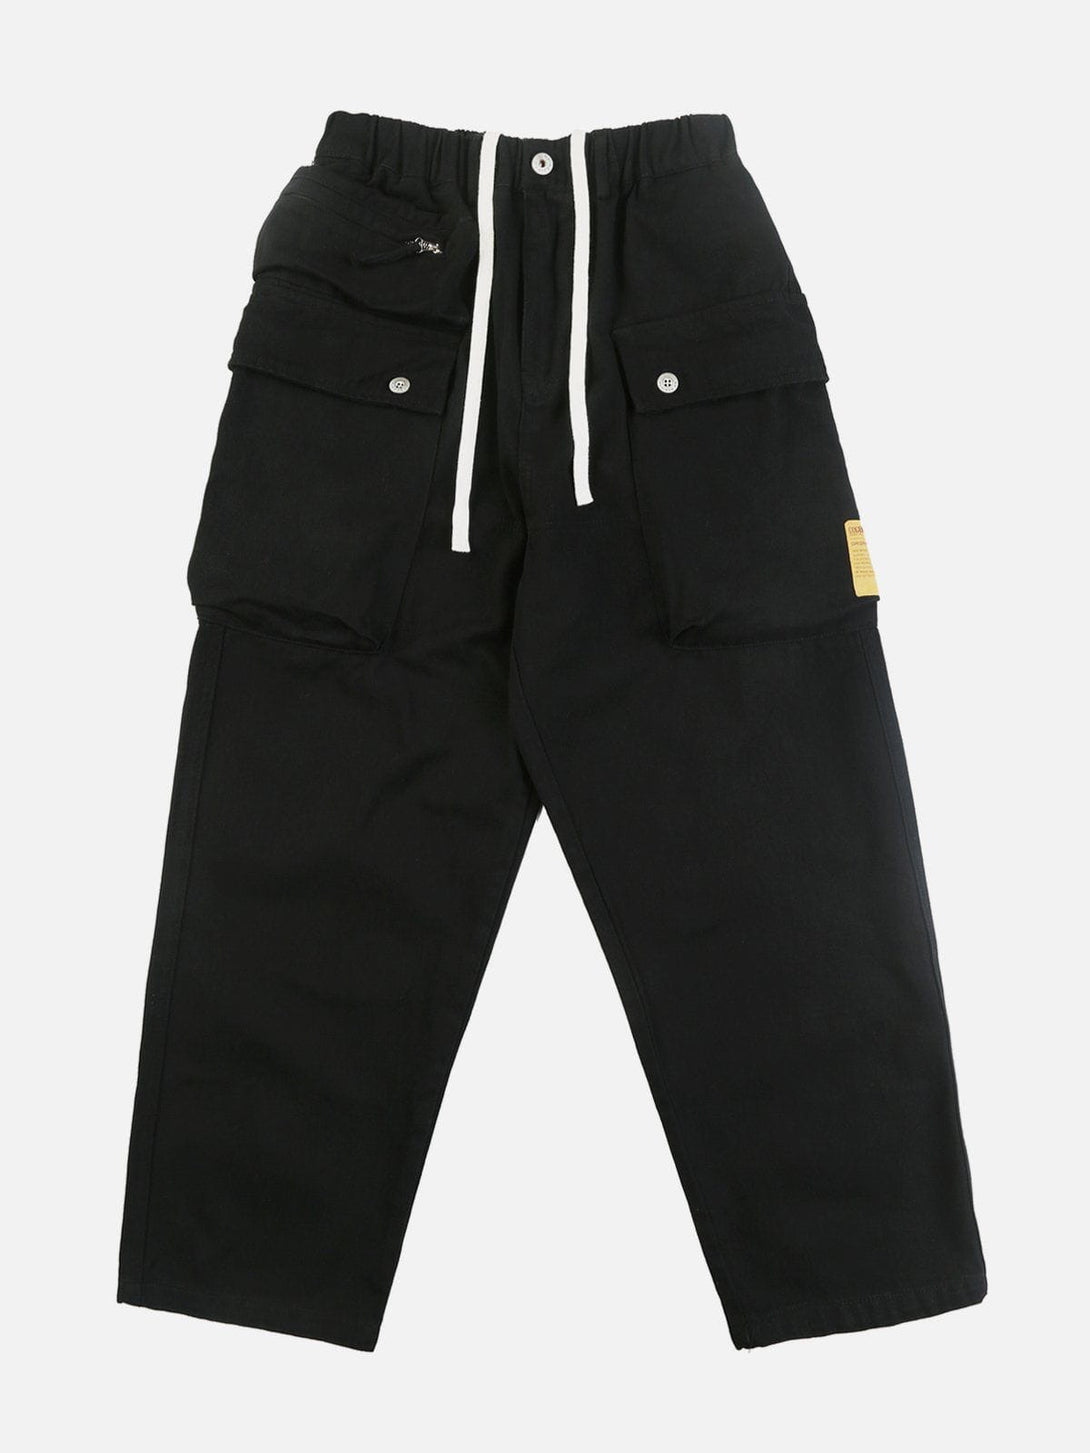 Levefly - Thickened Multi-pocket Cargo Pants - Streetwear Fashion - levefly.com